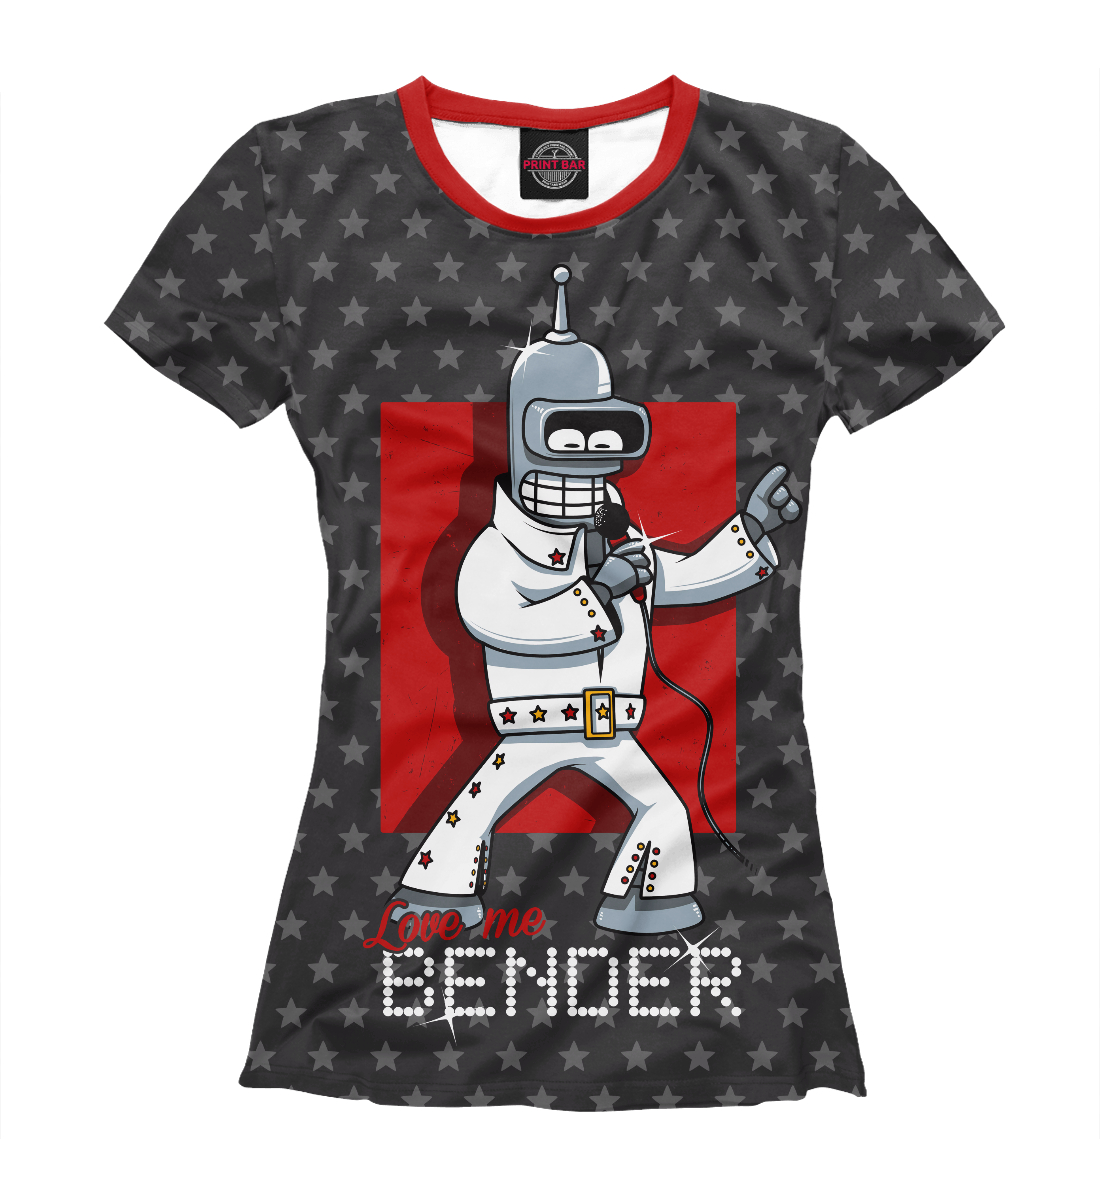 Футболка Bender Presley для женщин, артикул: FUT-407946-fut-1mp